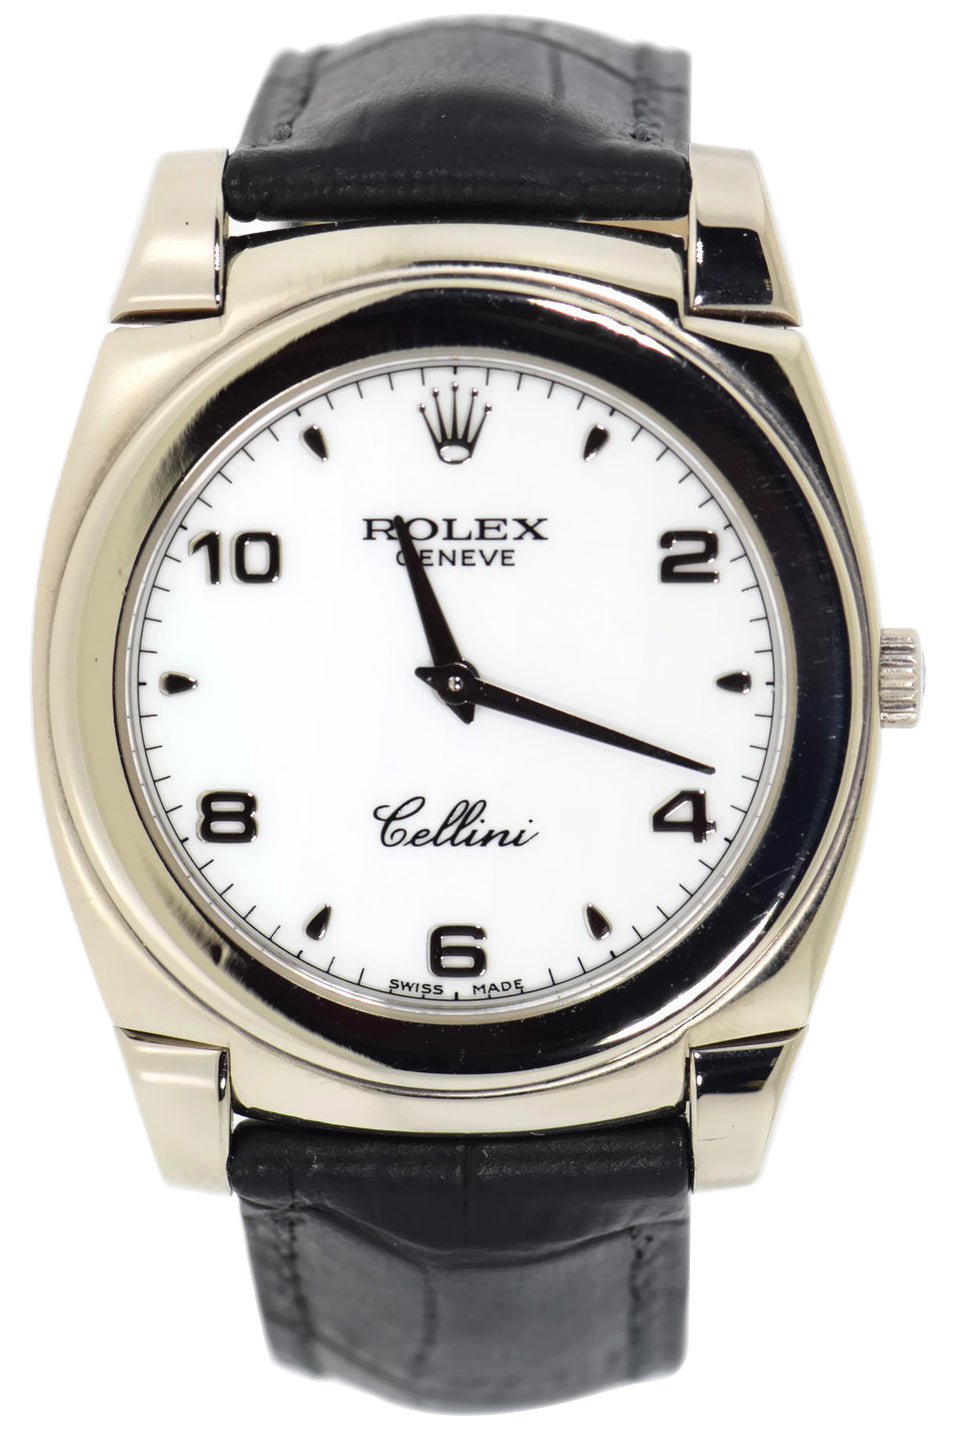 Rolex Cellini 5330 2